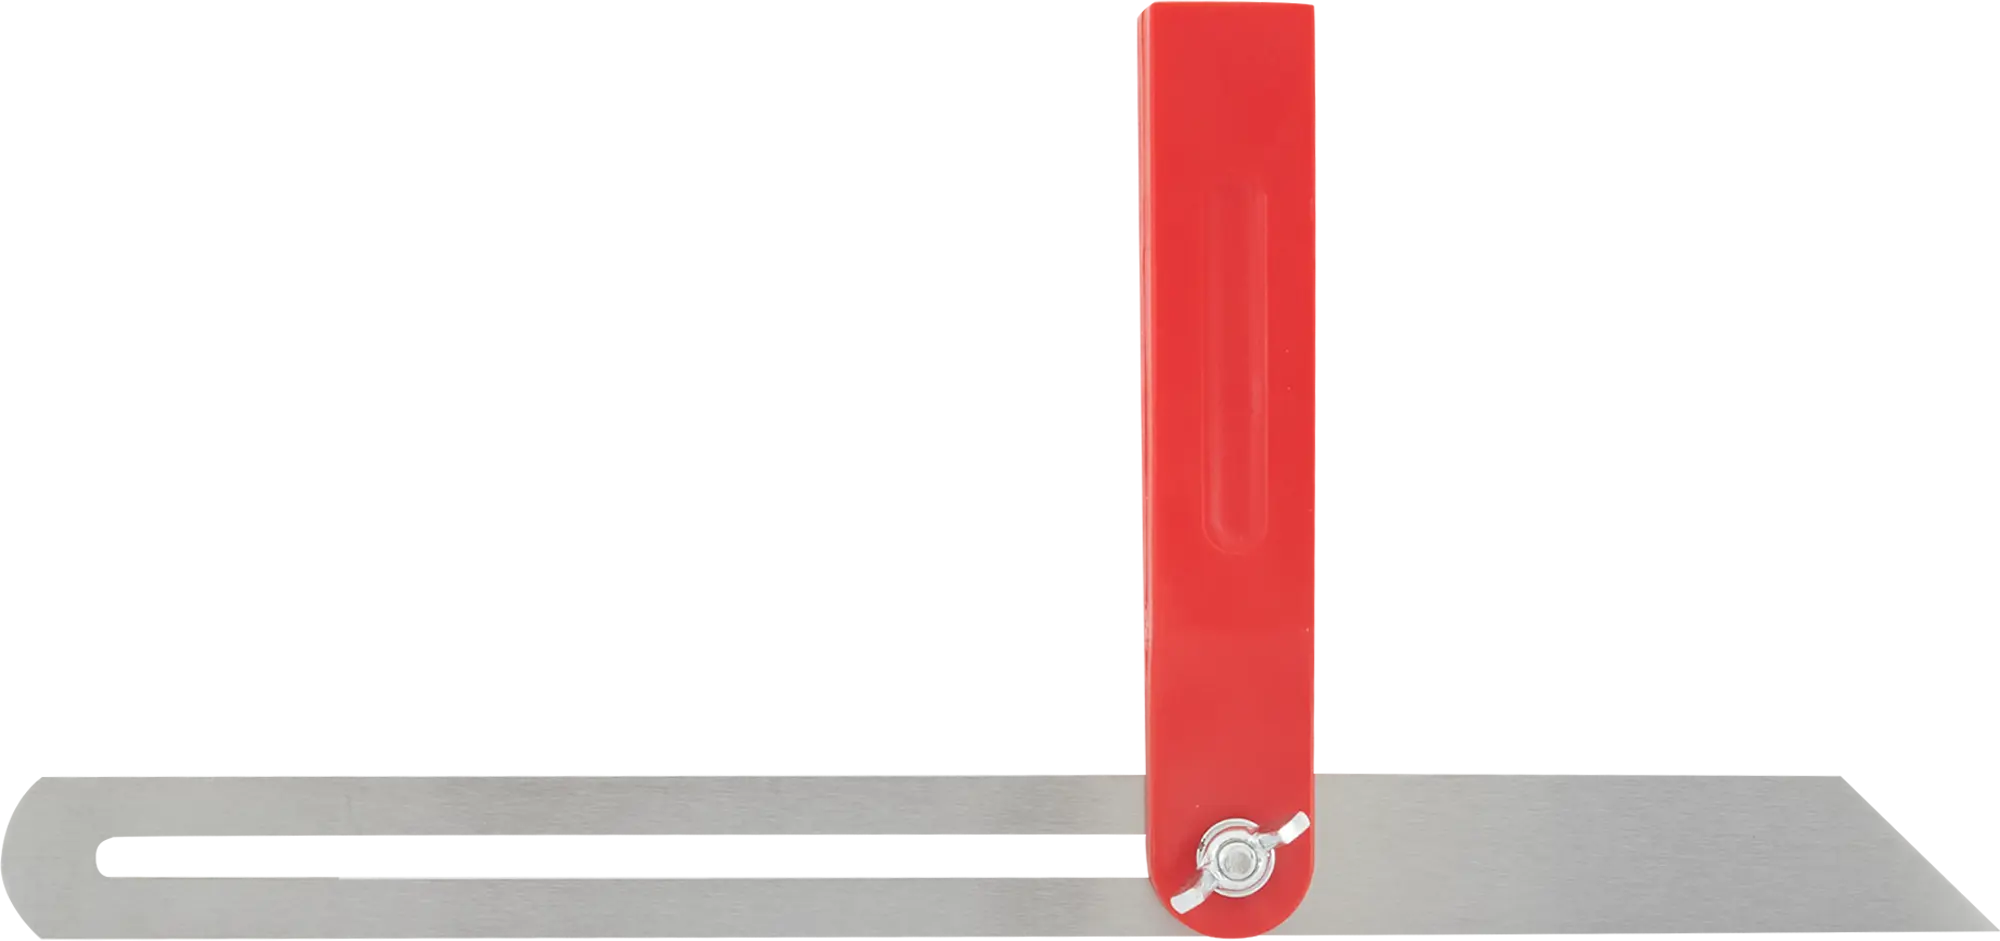 Угломер-шаблон малка 3762-F 300 мм профессиональная малка угломер kraftool